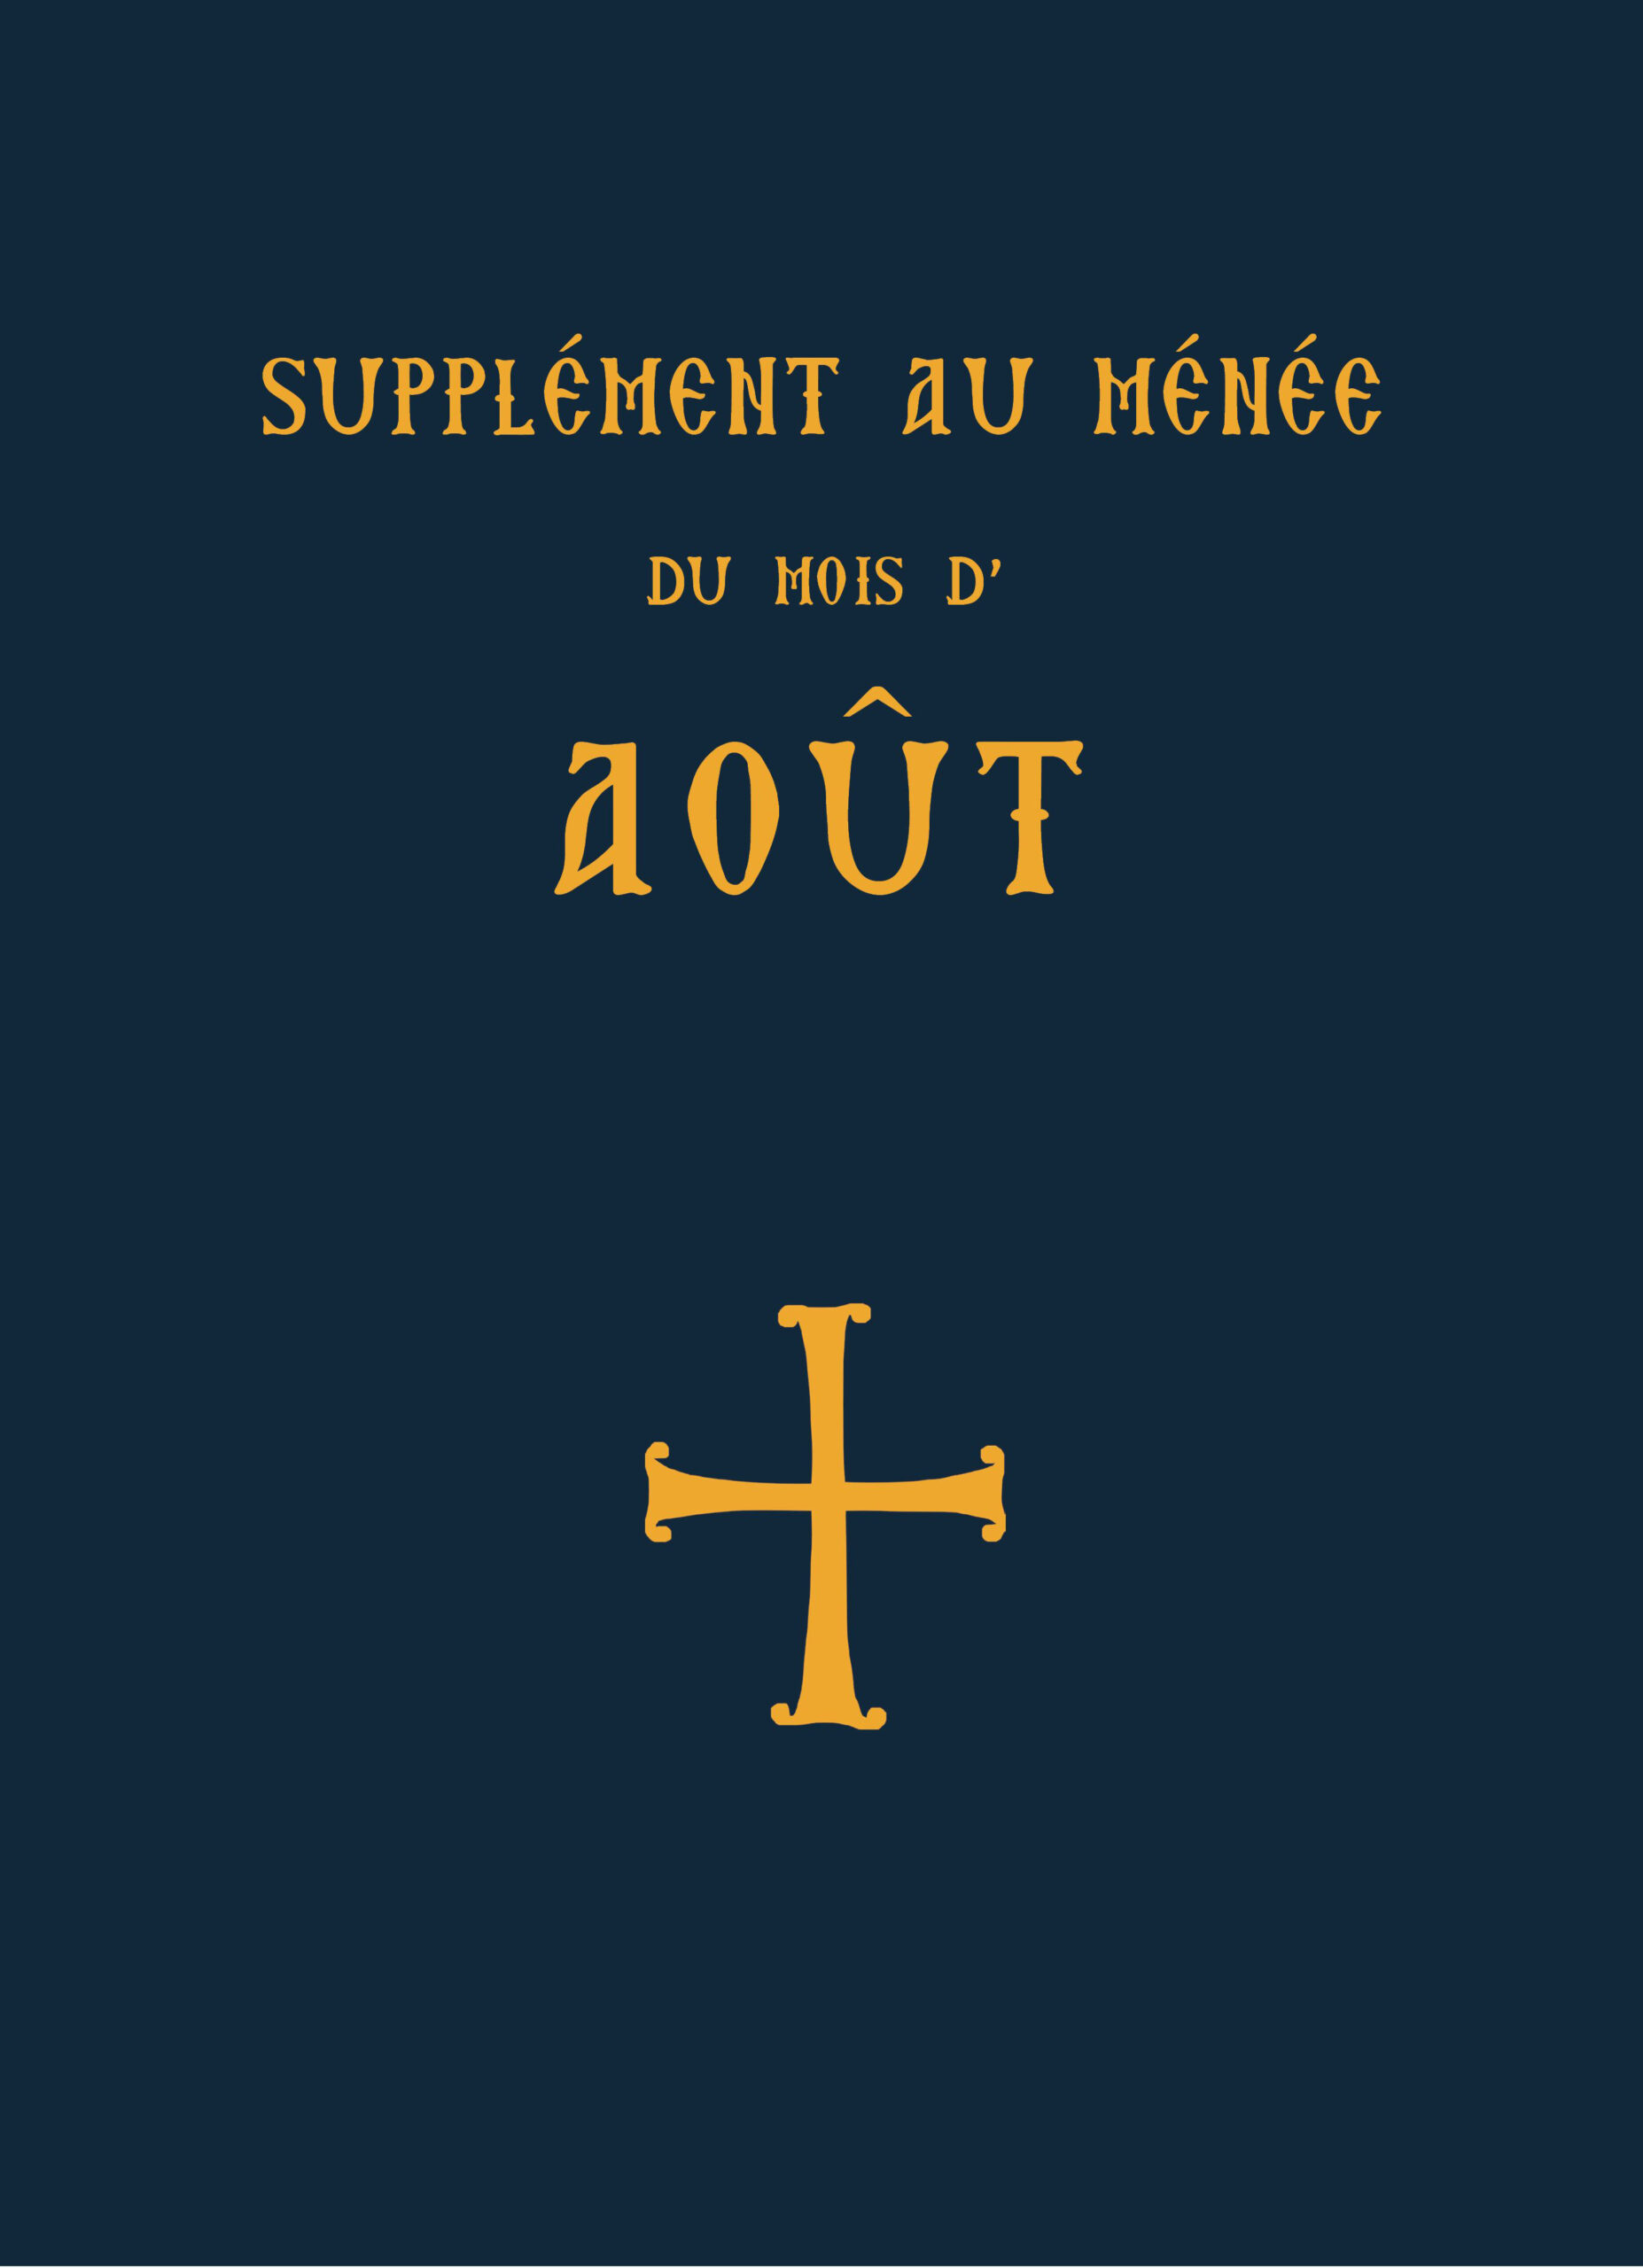 Supplement Au Menee Daout